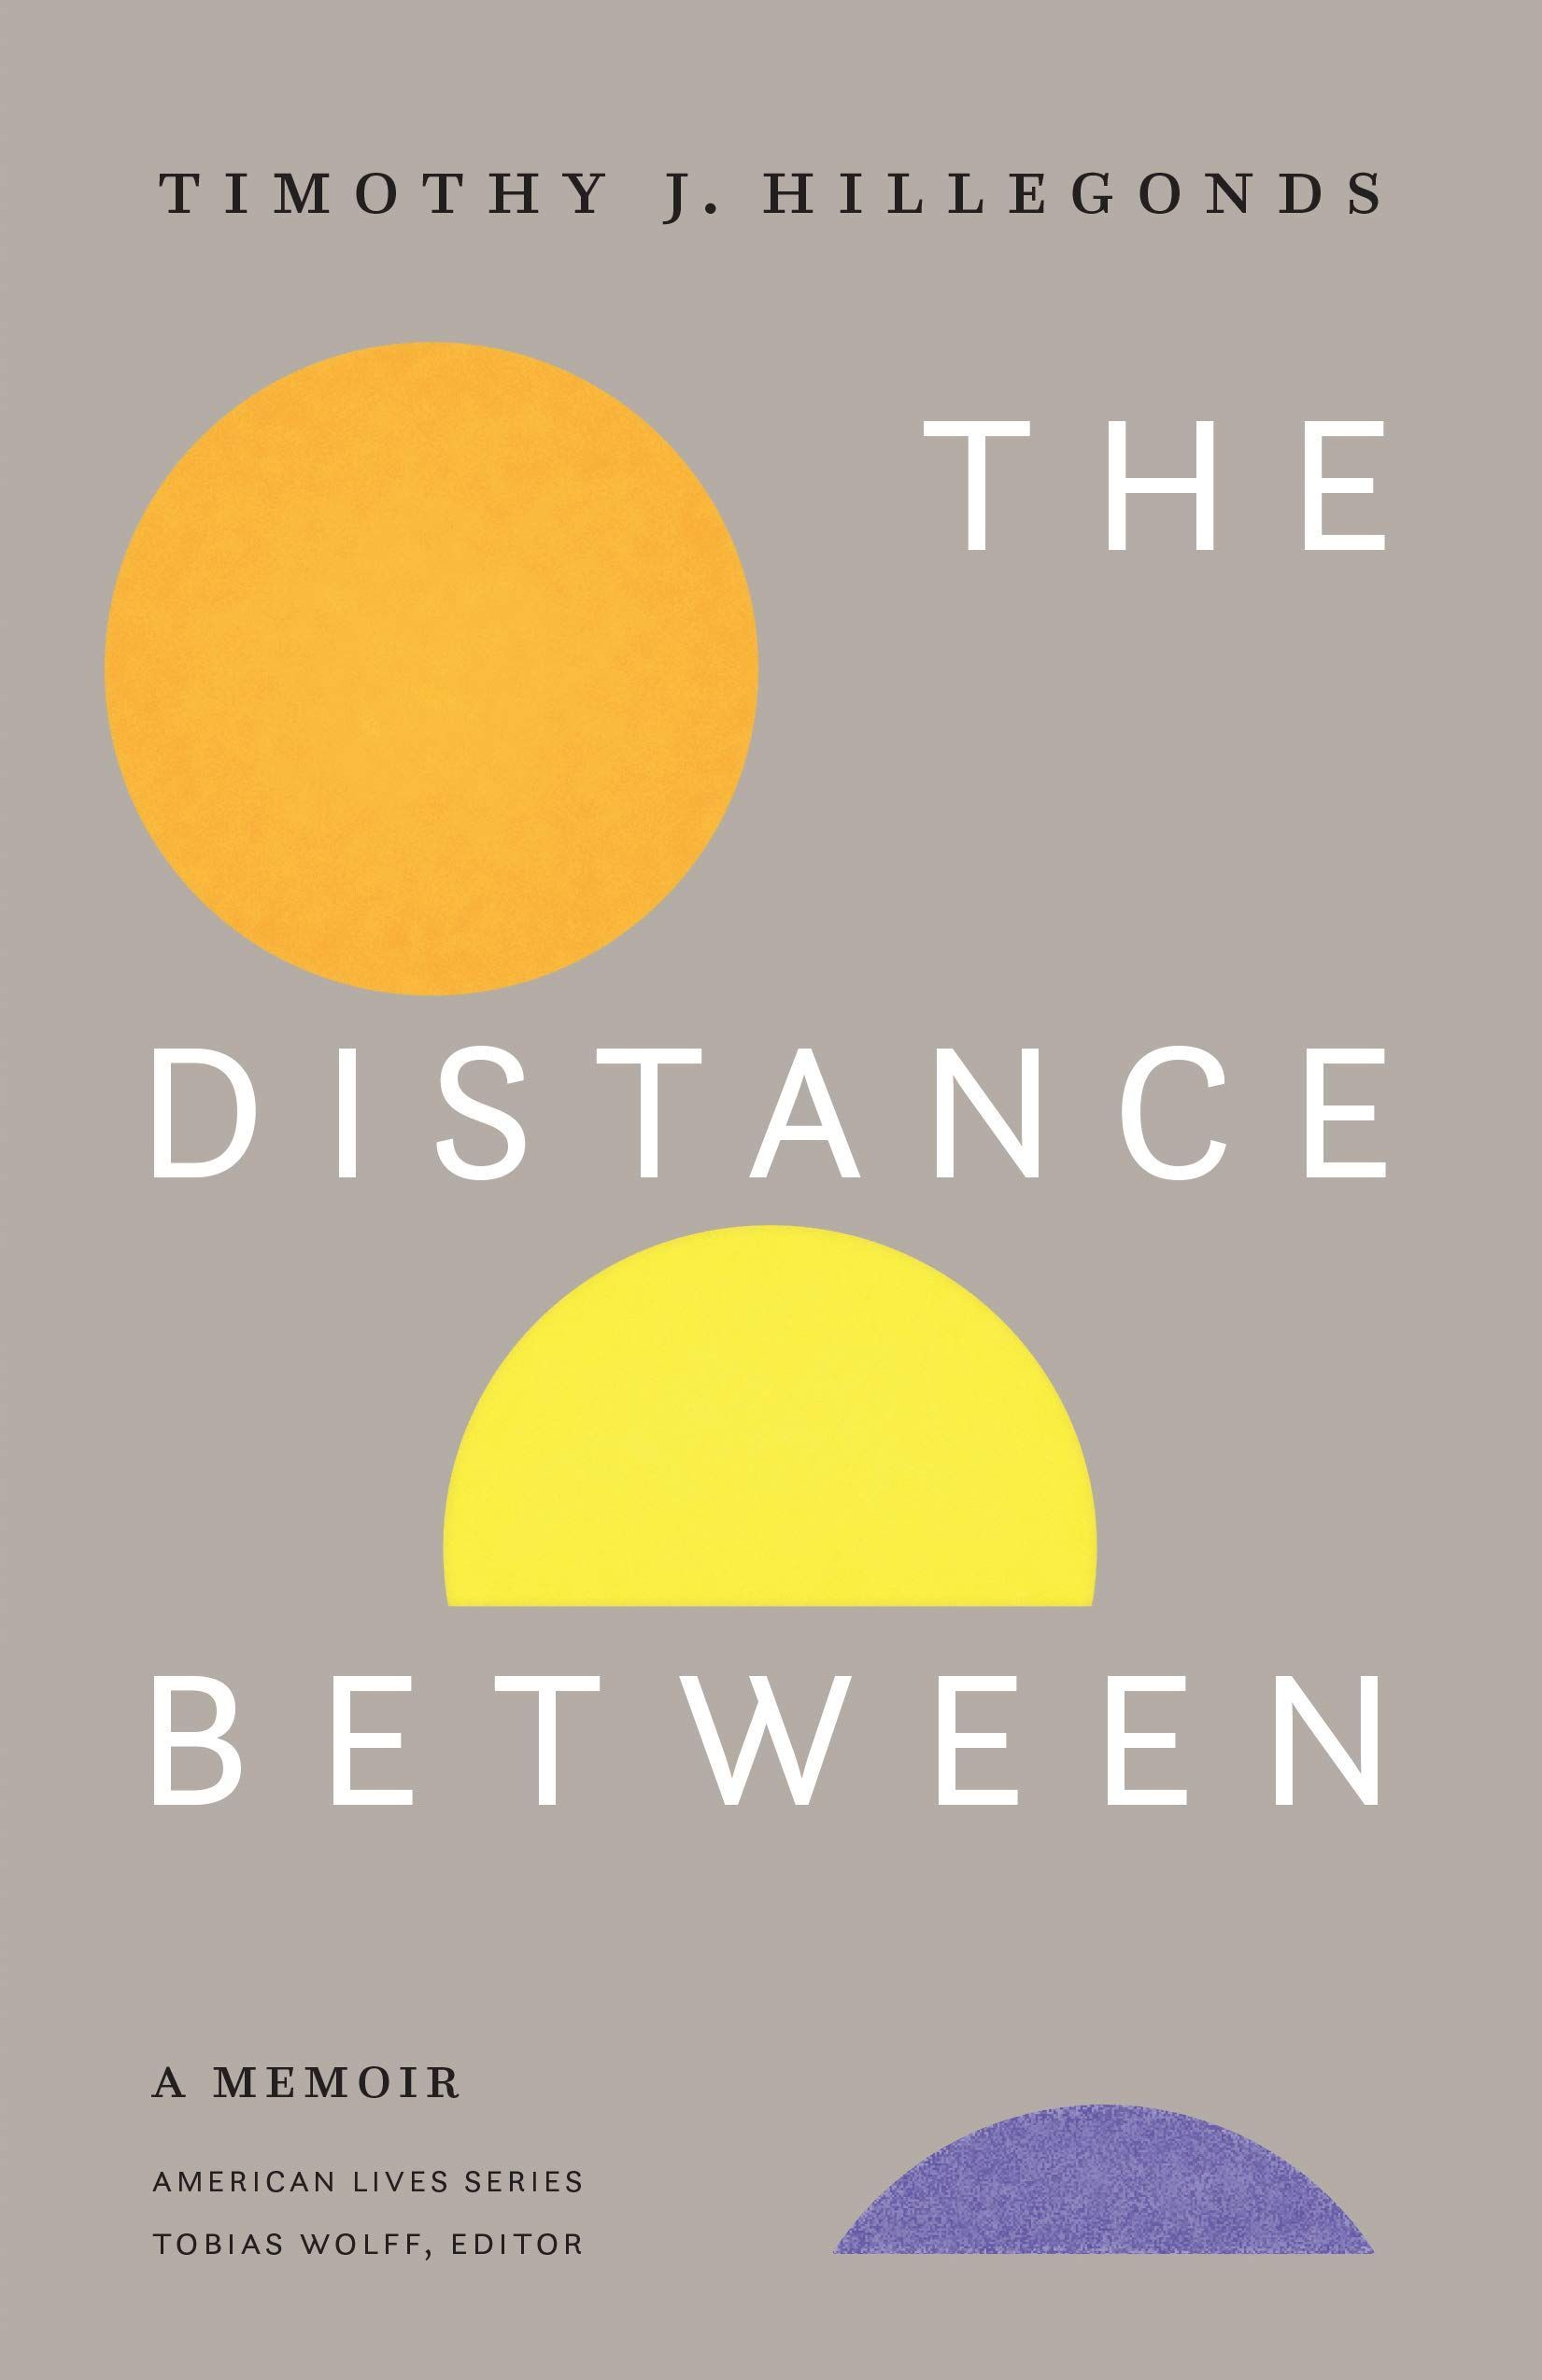 Kicking Down Doors: On Timothy J. Hillegonds’s “The Distance Between”